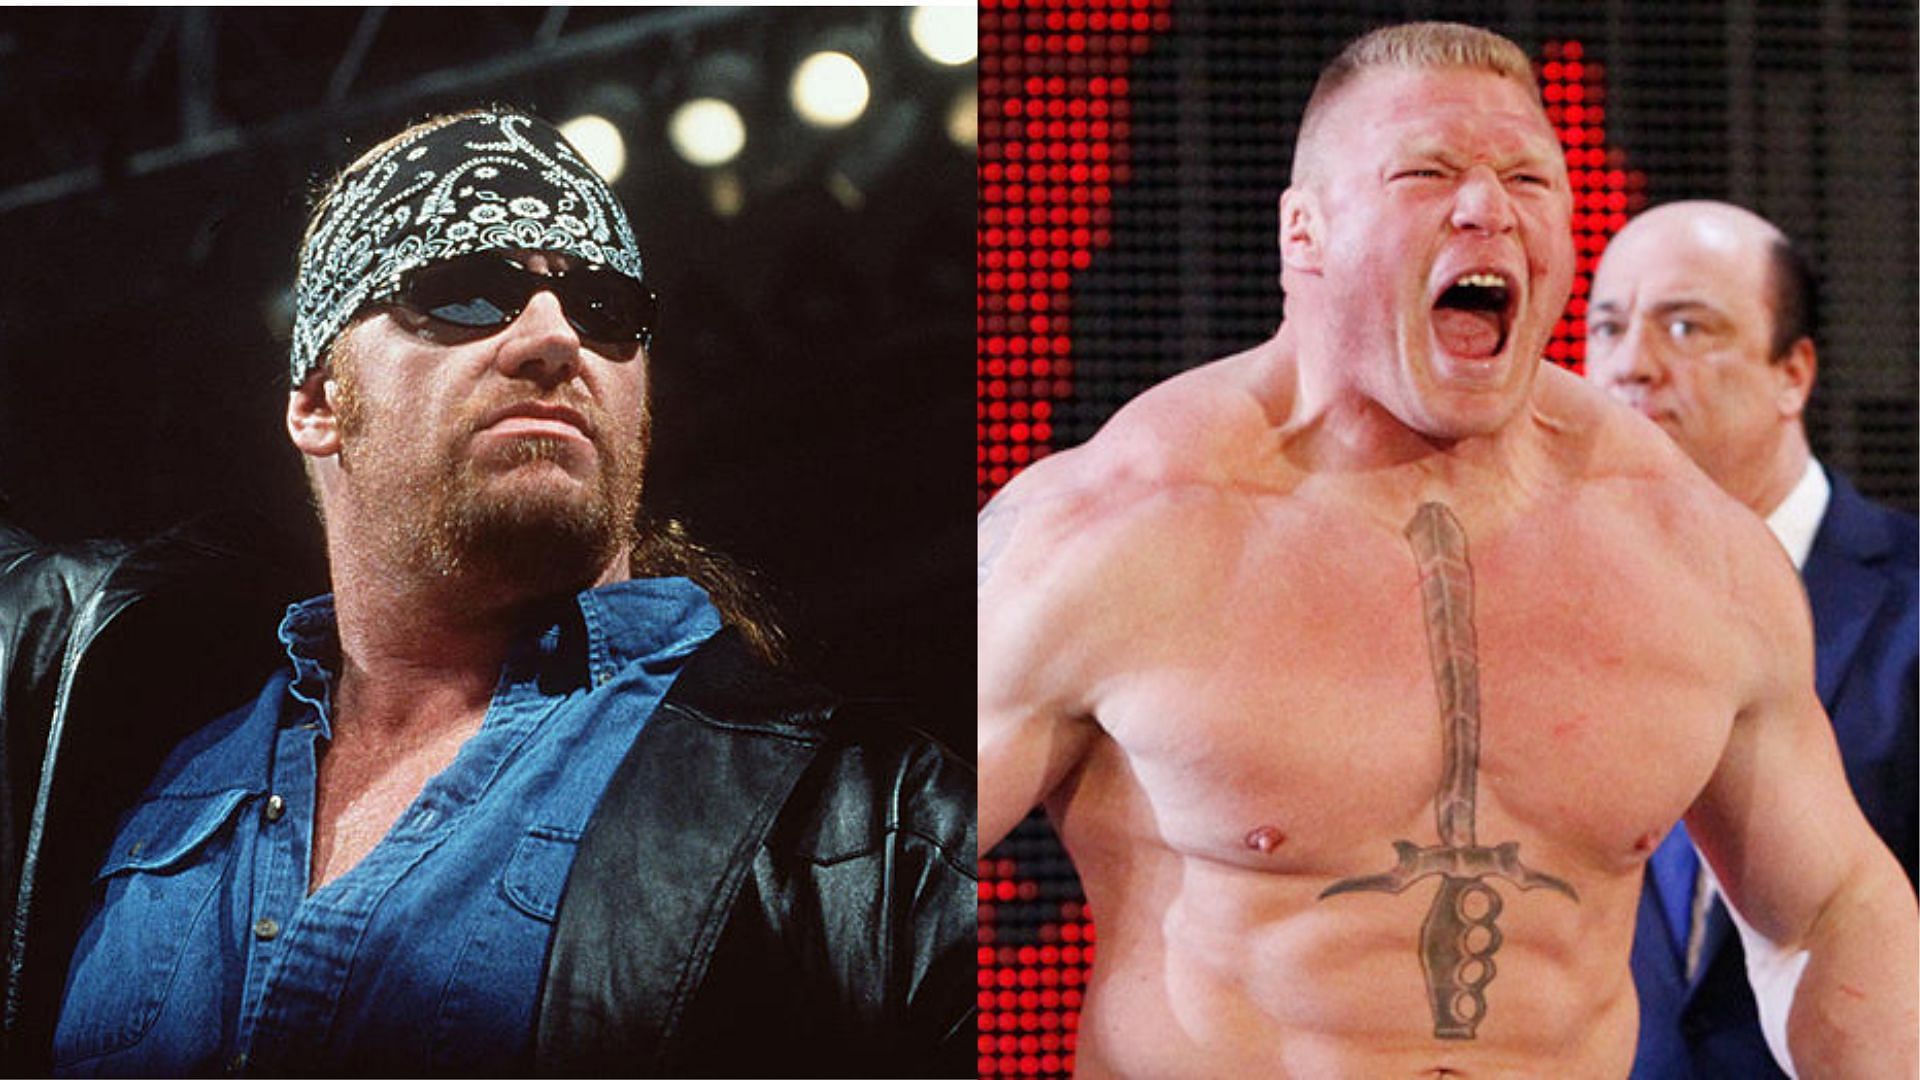 undertaker vs brock lesnar wrestlemania 30 wallpaper